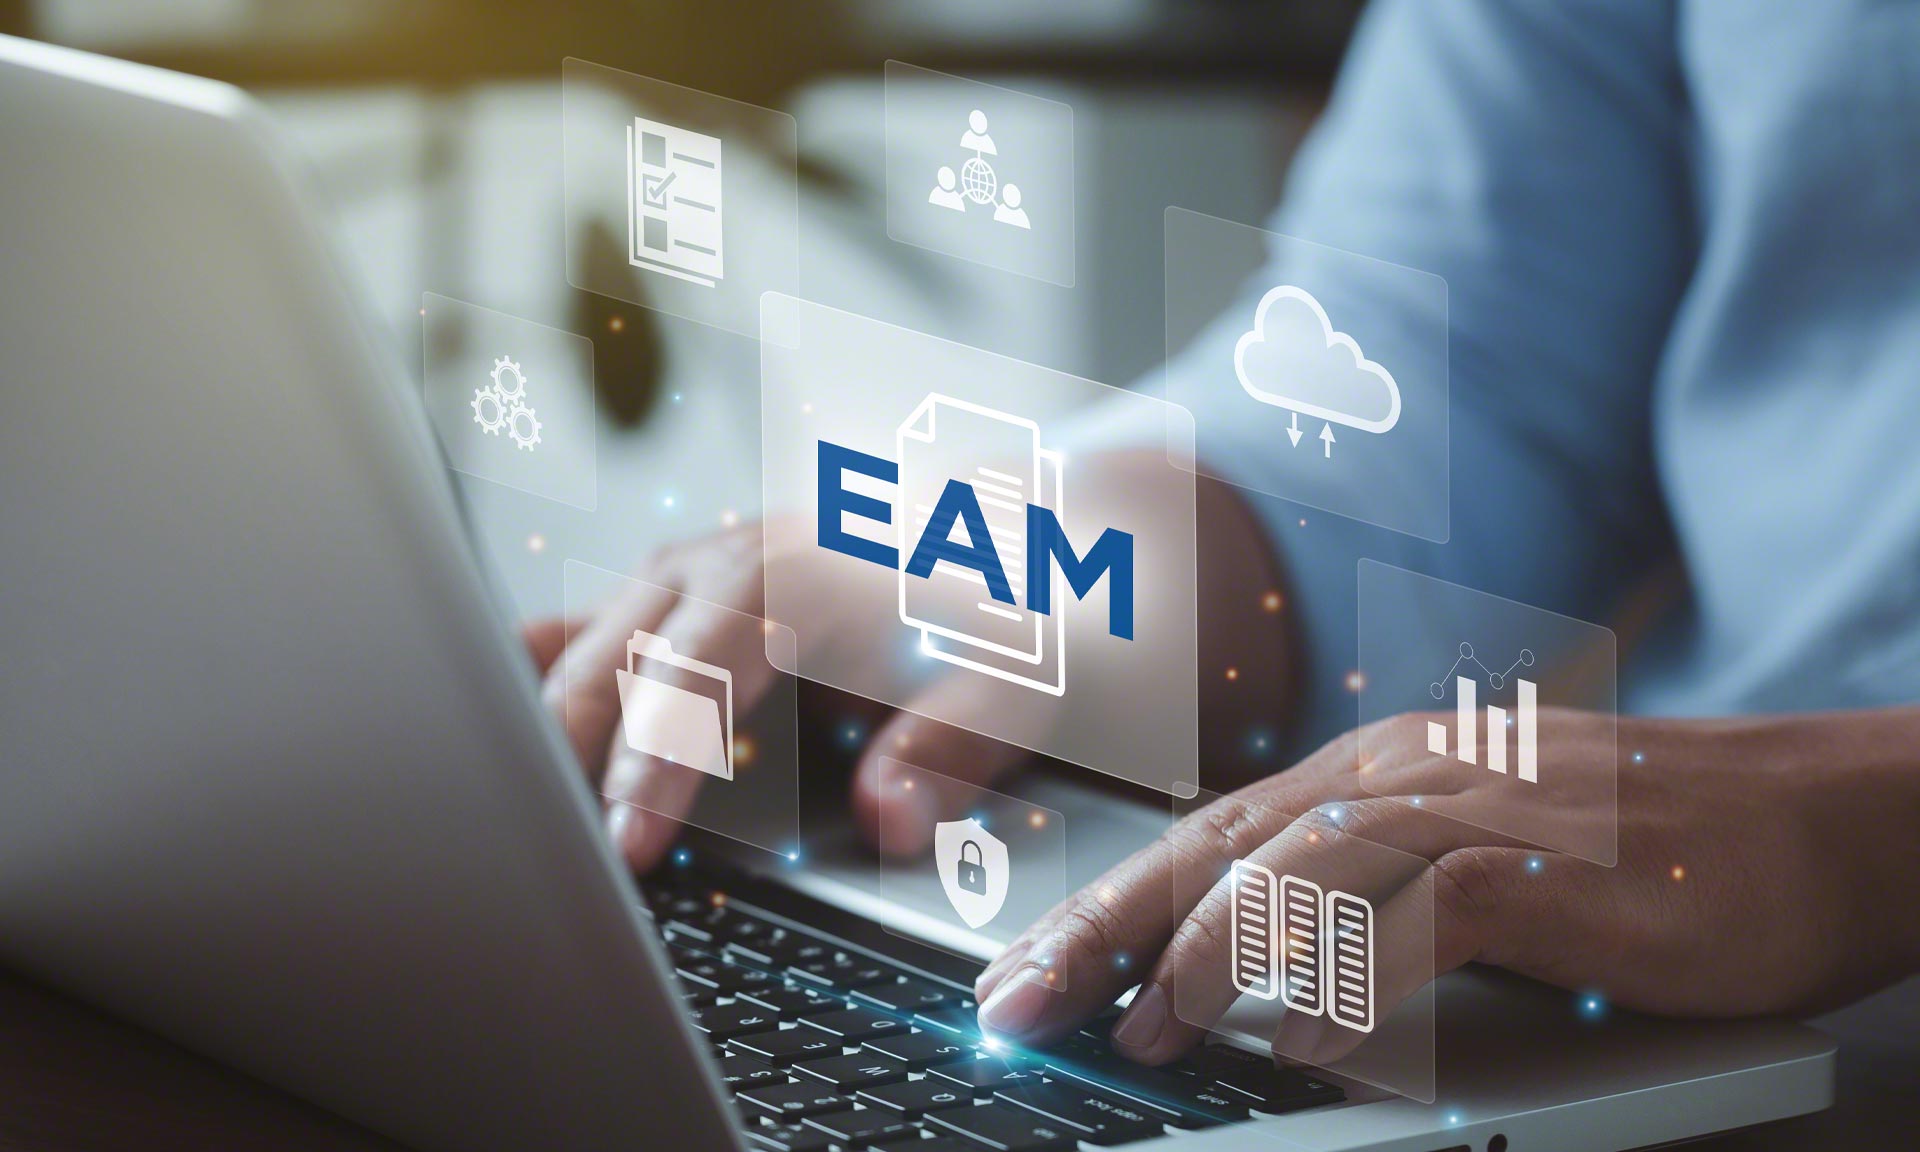 L'Enterprise Asset Management (EAM) combina software, sistemi e servizi